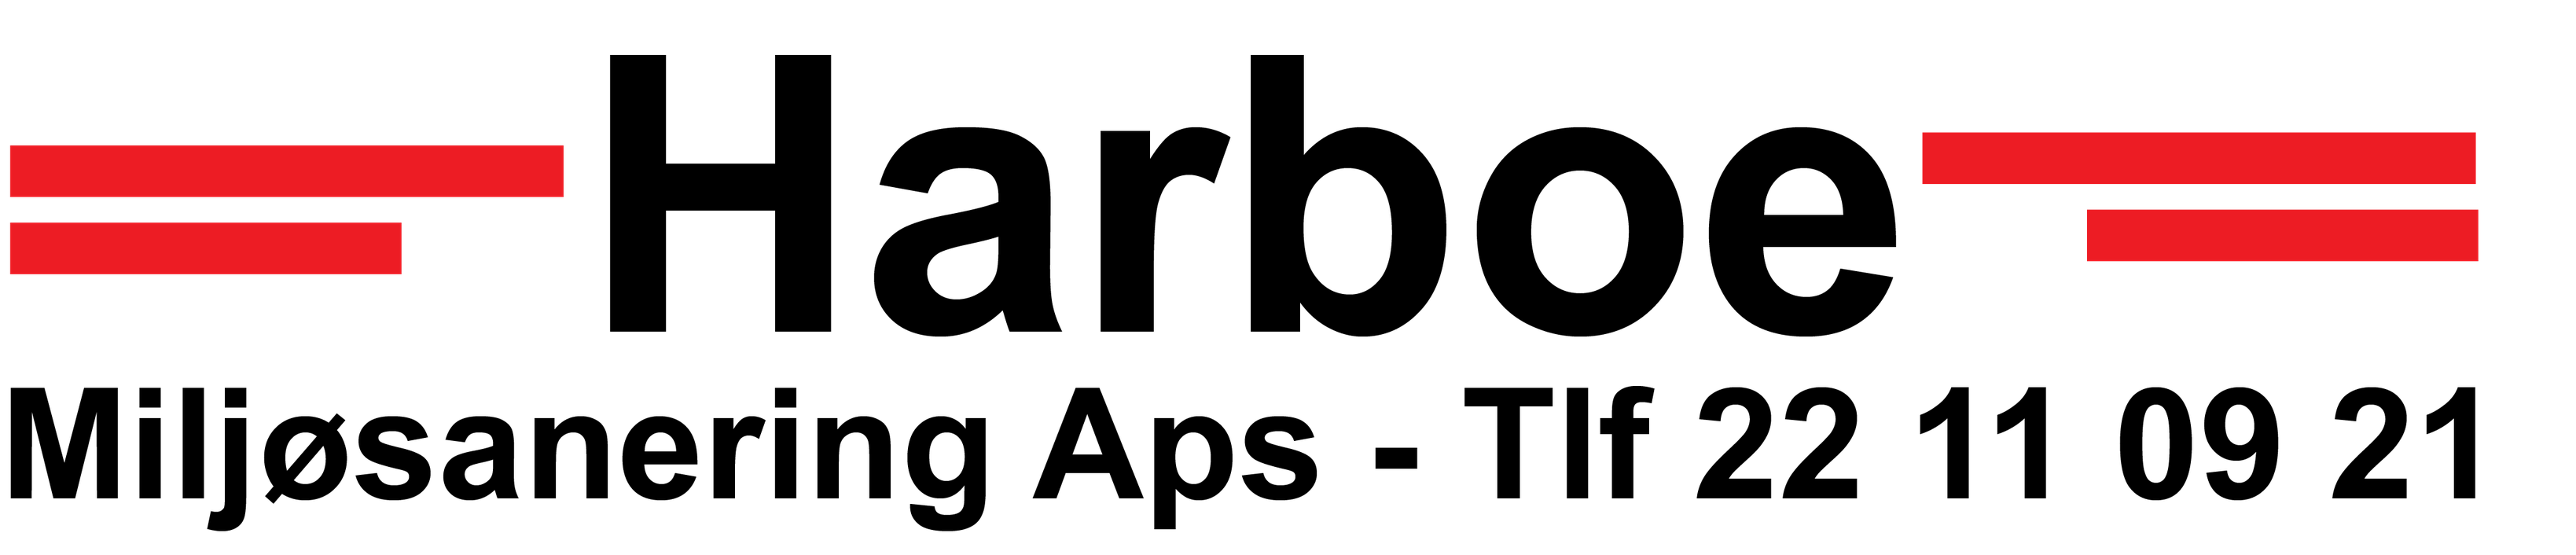 Harboe ApS logo